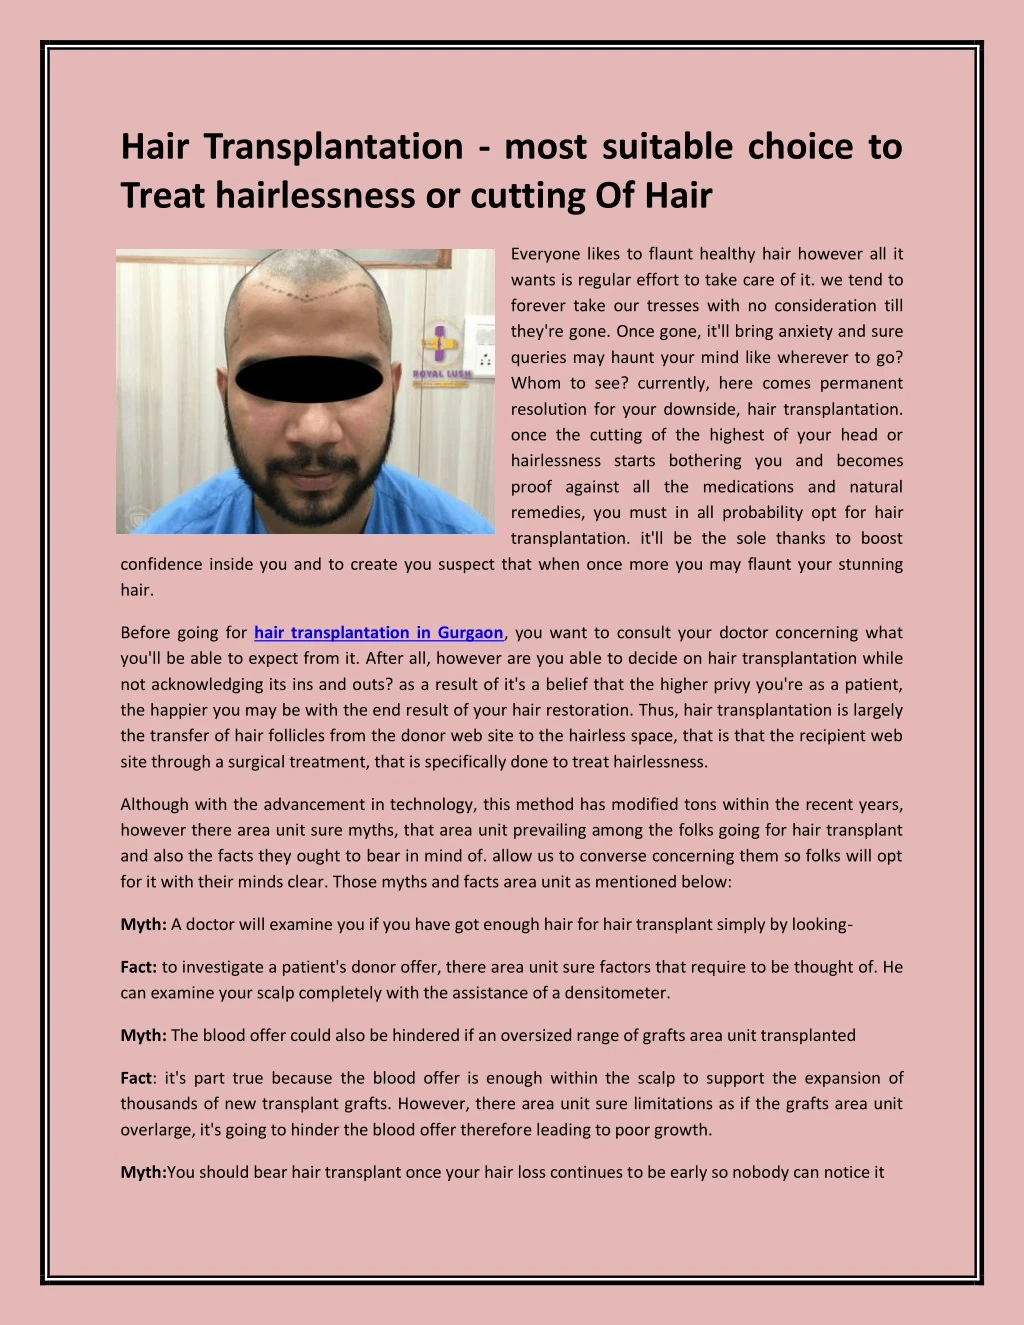 hair transplantation most suitable choice